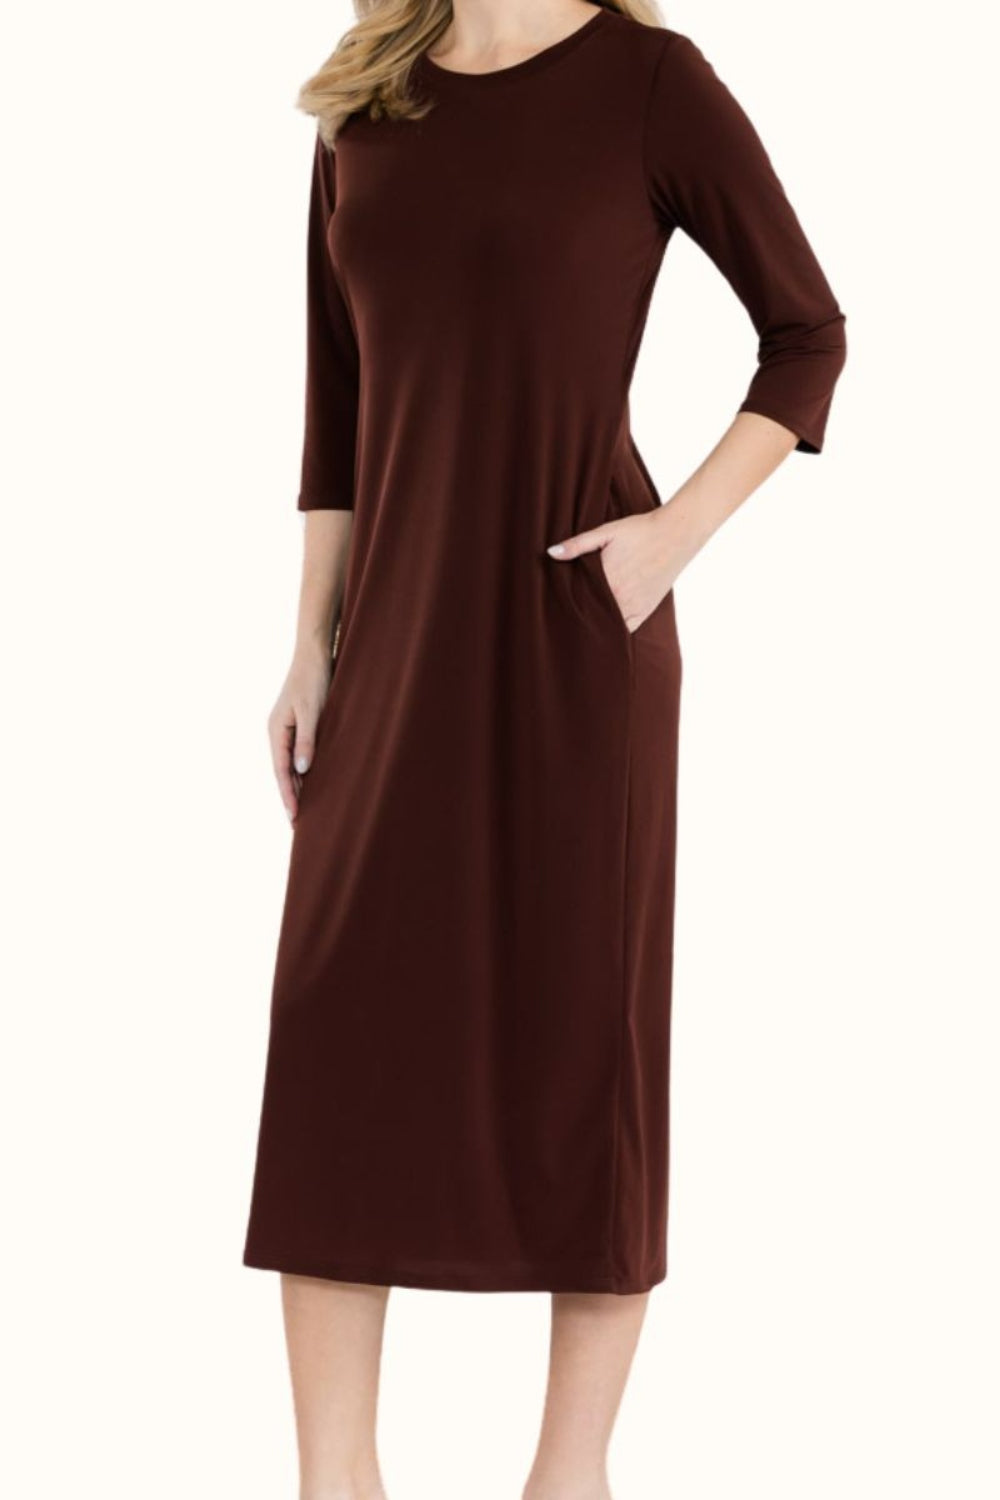 Celeste Elegant Full Size Round Neck Midi Dress - Sophistication Meets Comfort